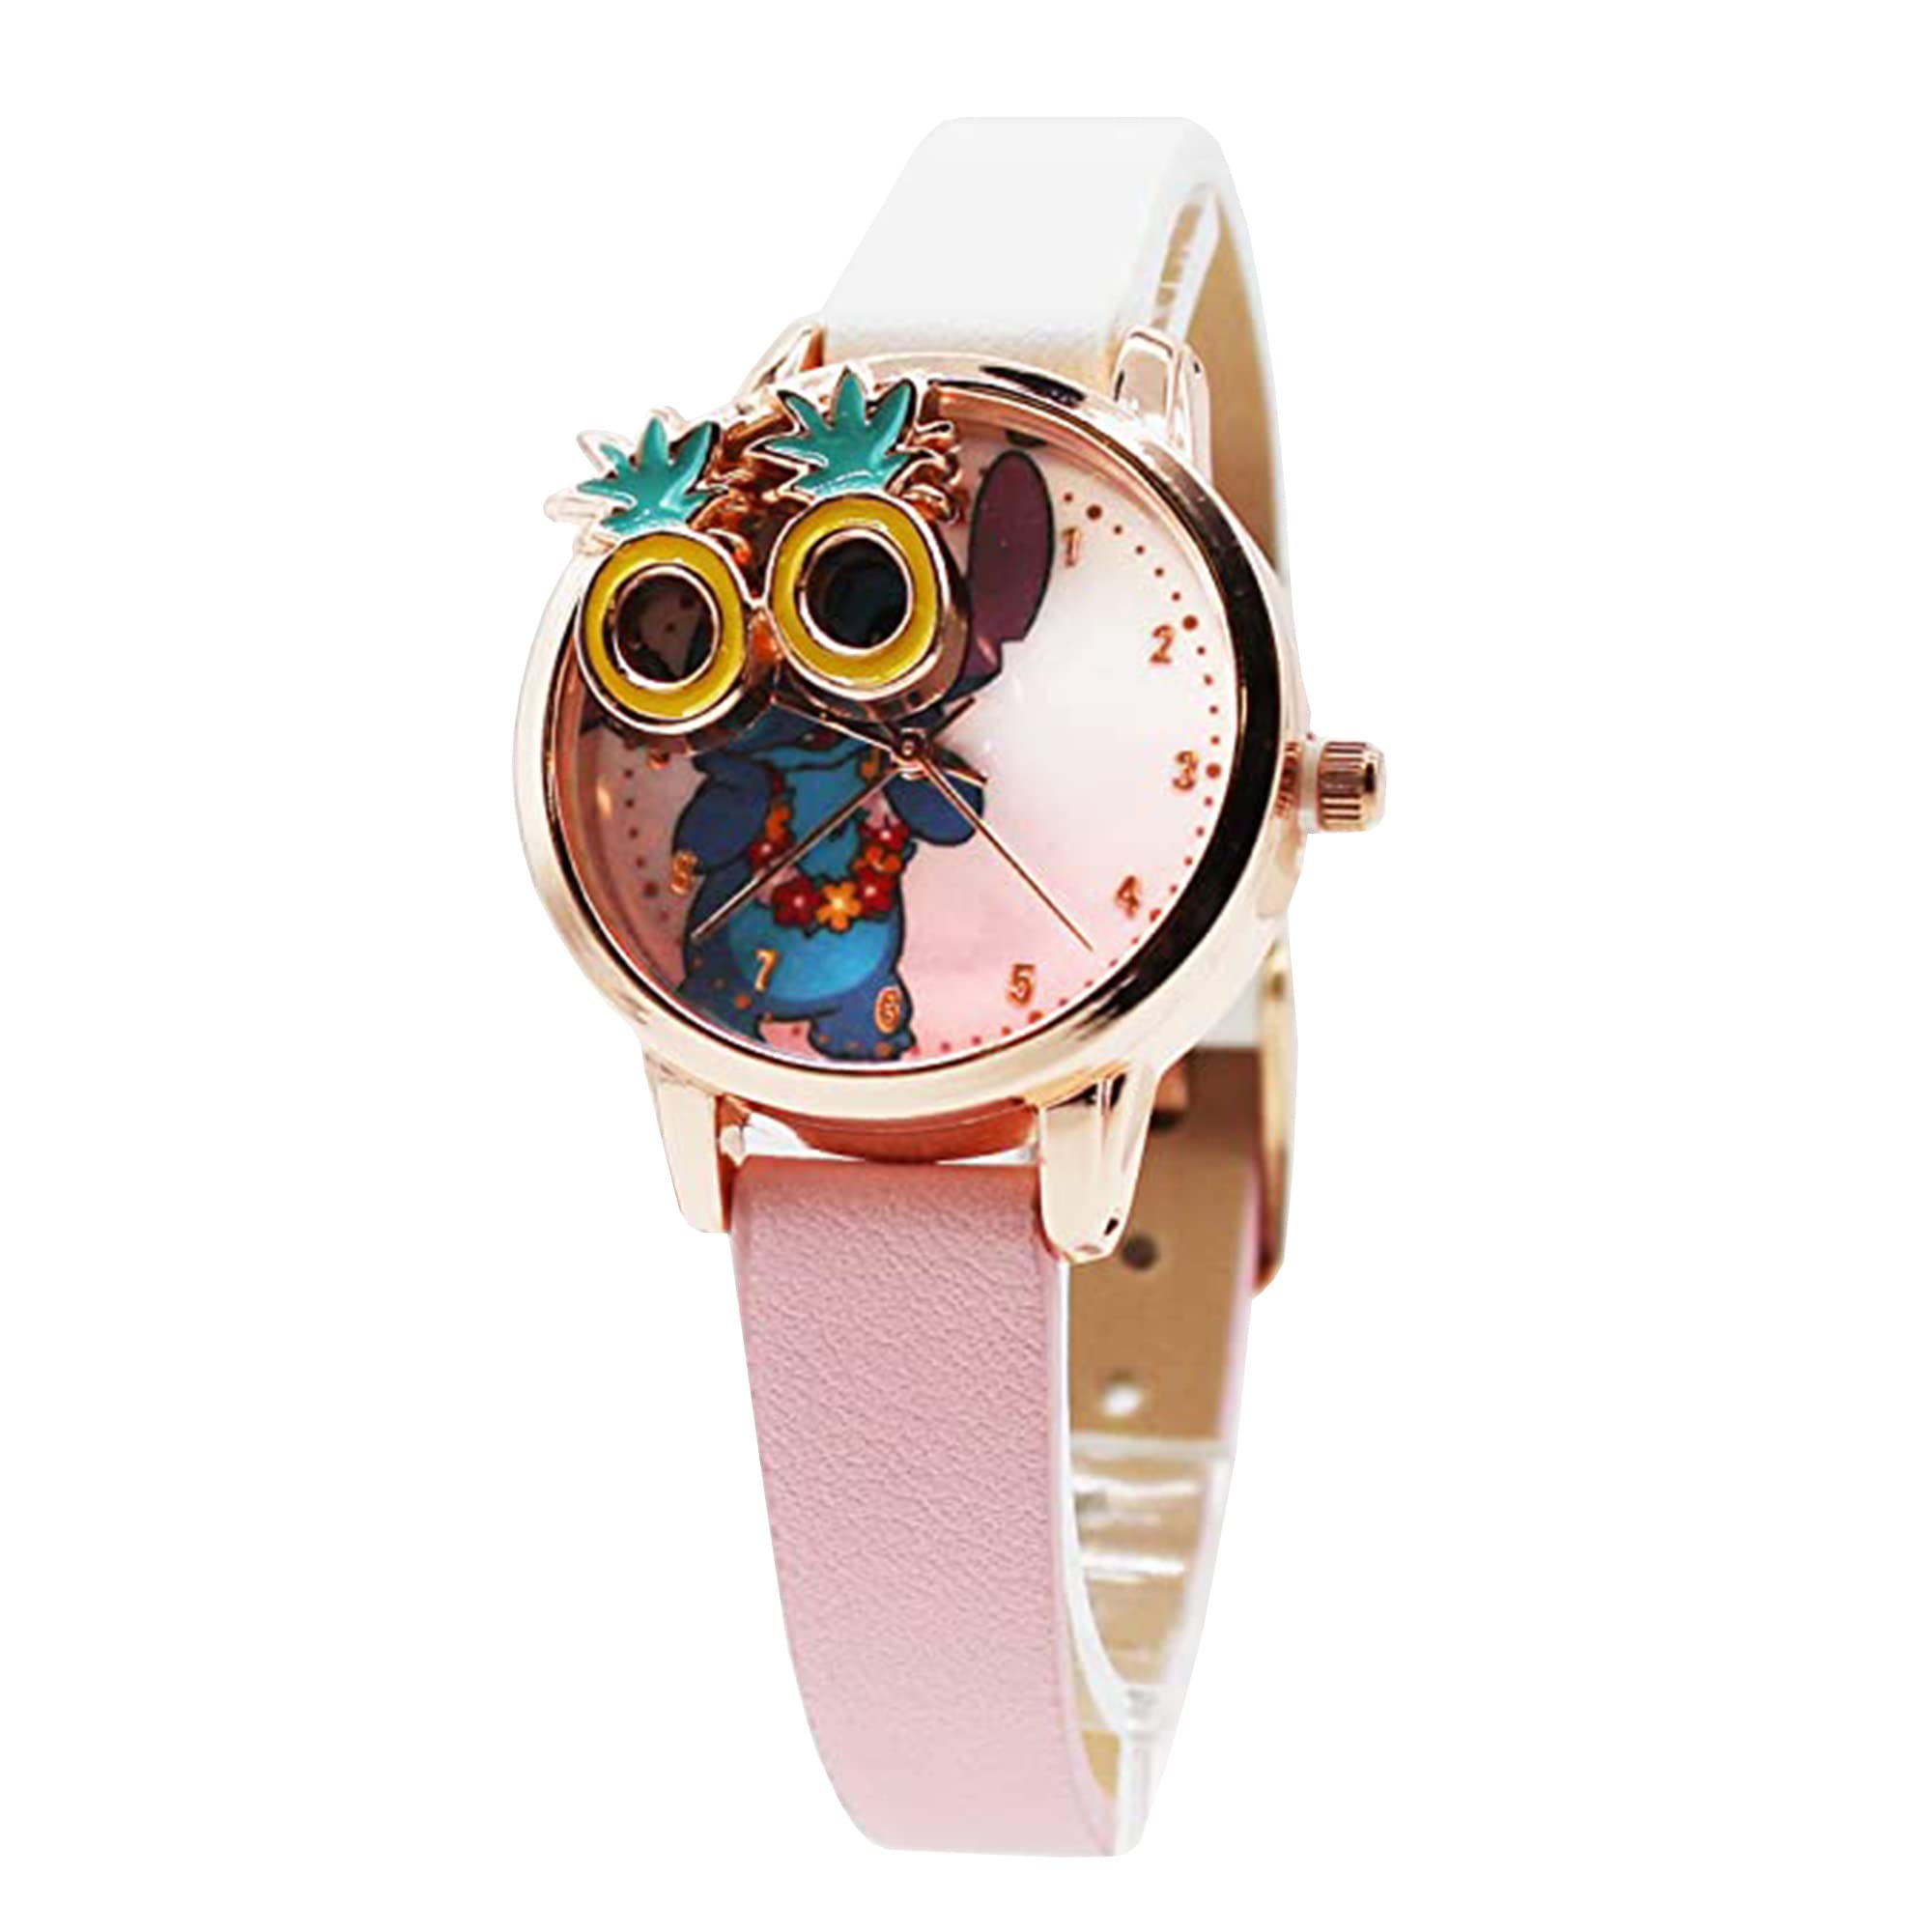 Accutime Women's Disney Lilo & Stitch Pink Gradient Analog Quartz Wrist Watch with Small Face, Rose Gold Accents for Women, Adult (Model: LAS5032AZ)